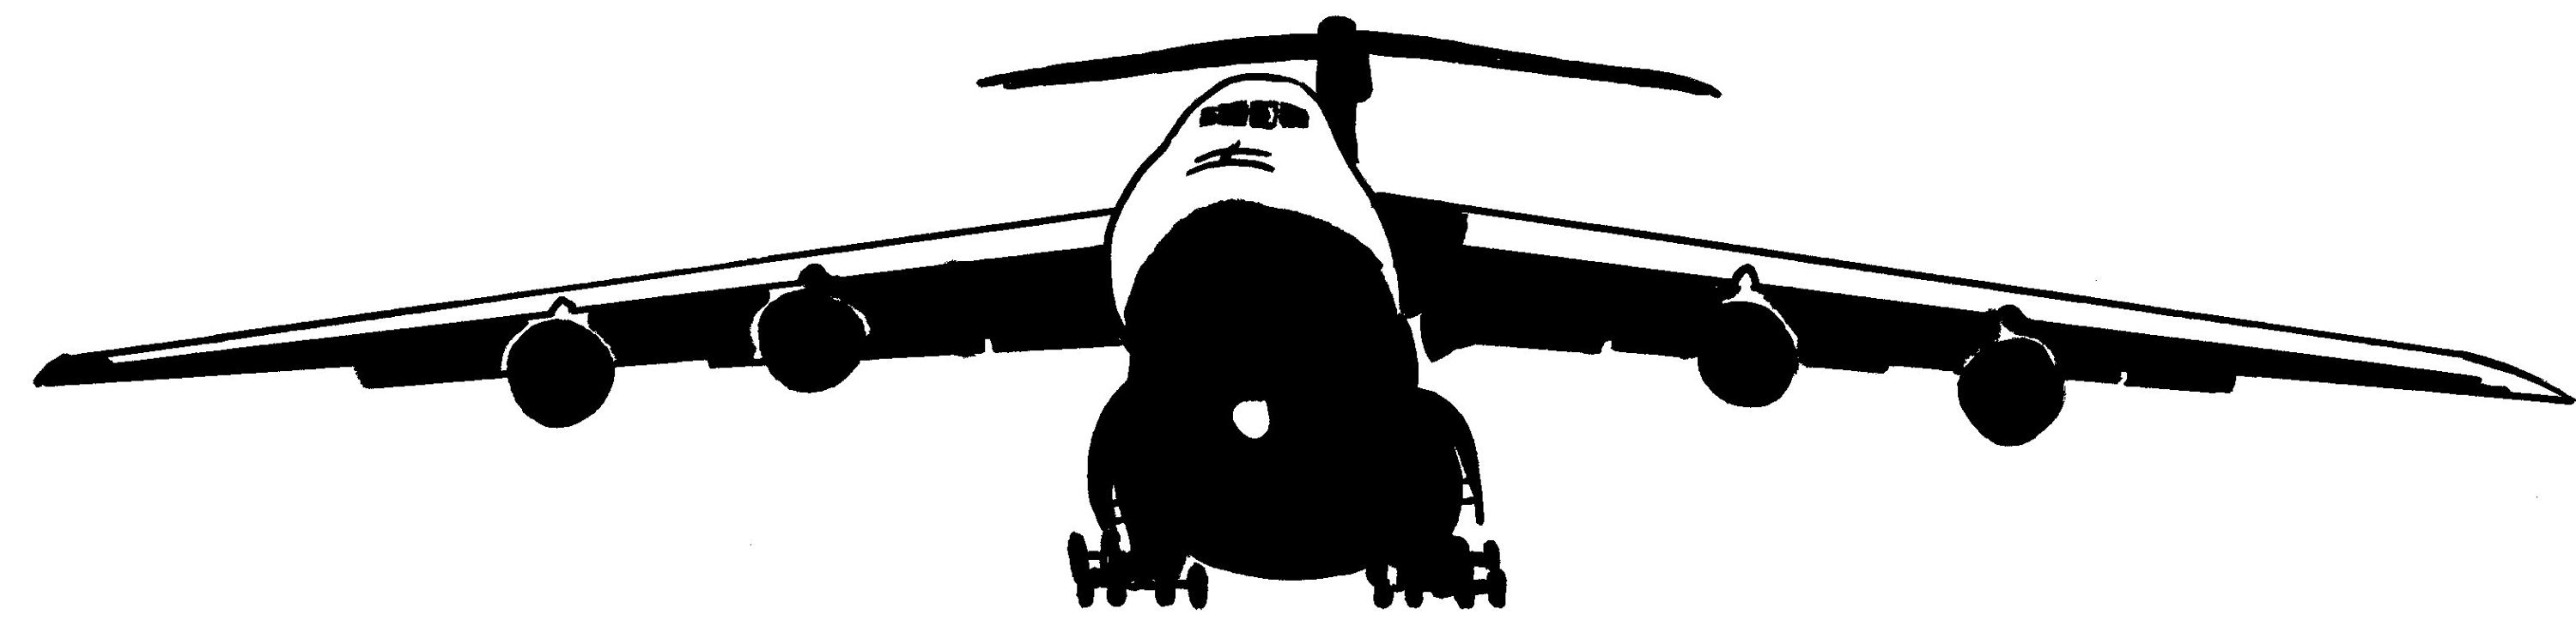 C-130 Silhouette Clipart